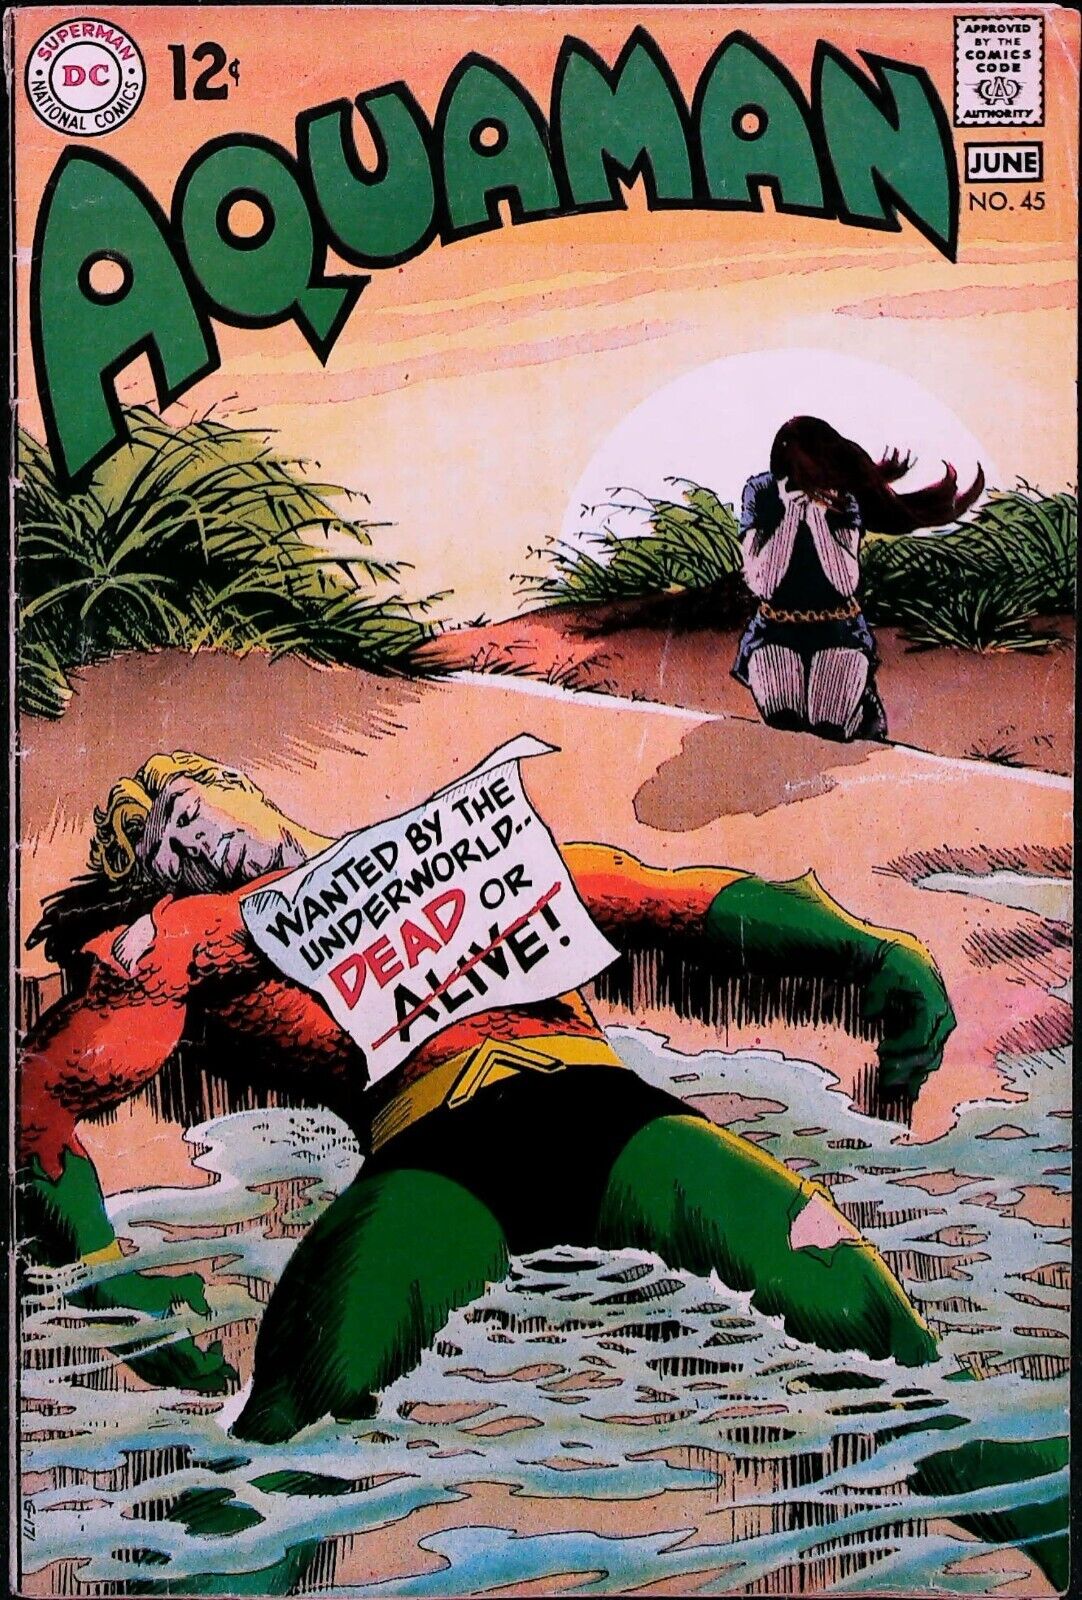 Aquaman #45 Vol 1 (1969) - DC - CENTERFOLD IS DETACHED - Good Range